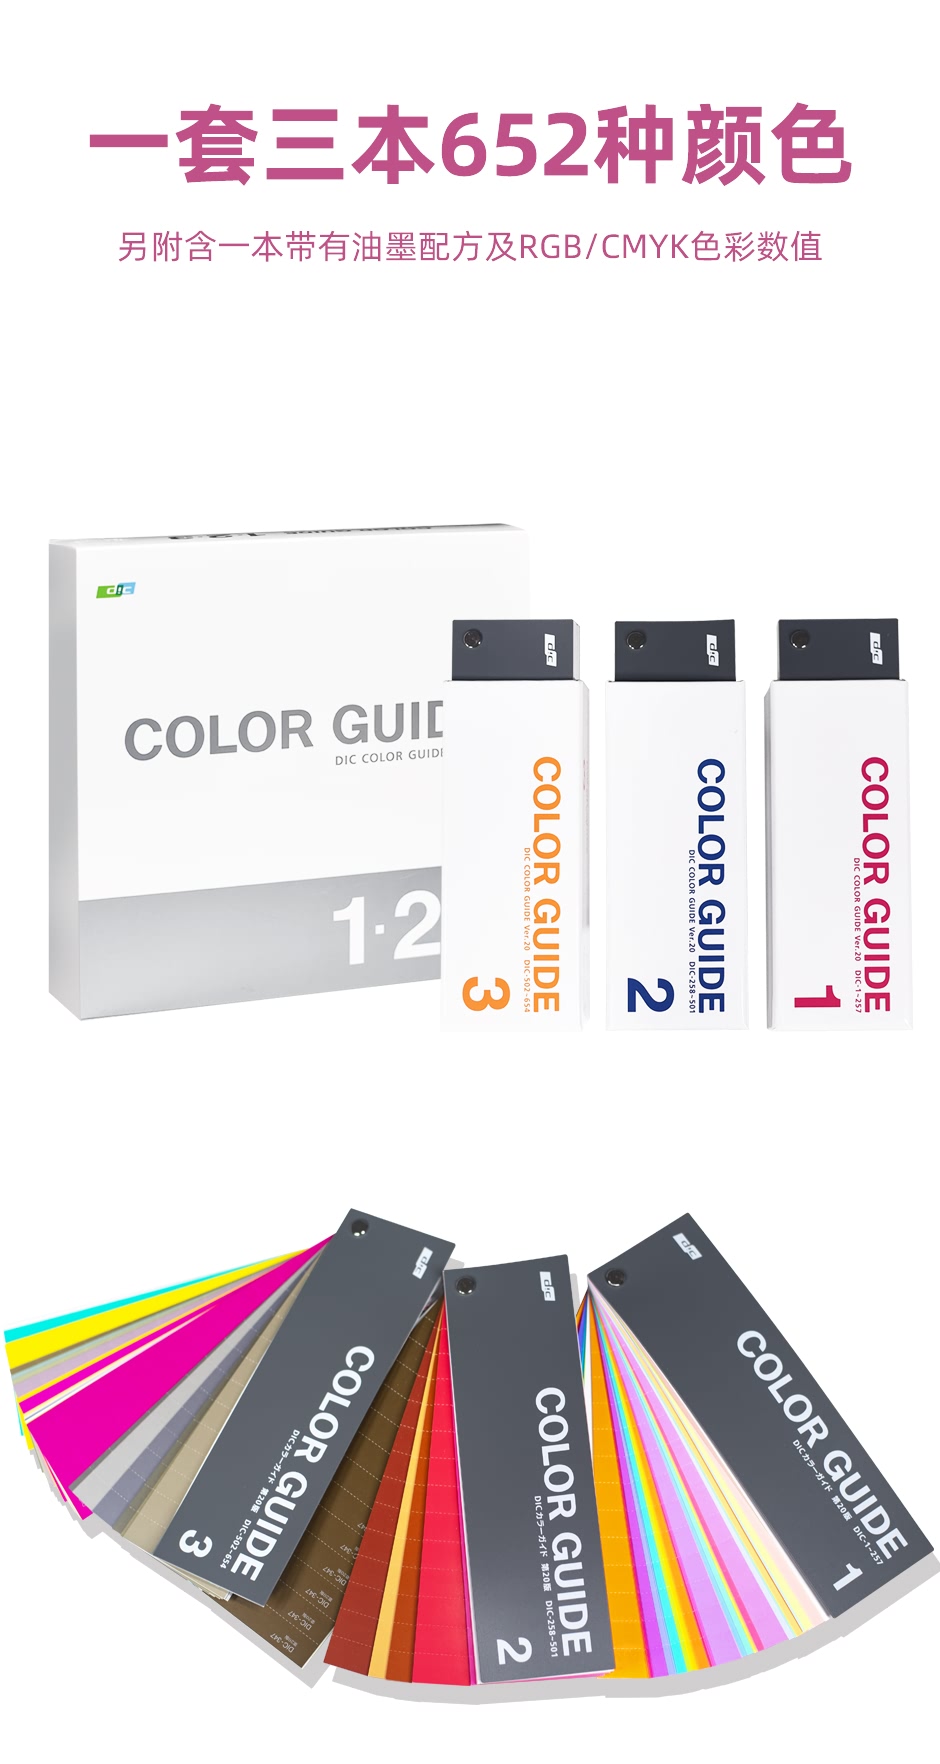 DIC色彩指南-第20版|DIC Color Guide .1.2.3DIC1.2.3 - 千通彩色彩管理官网